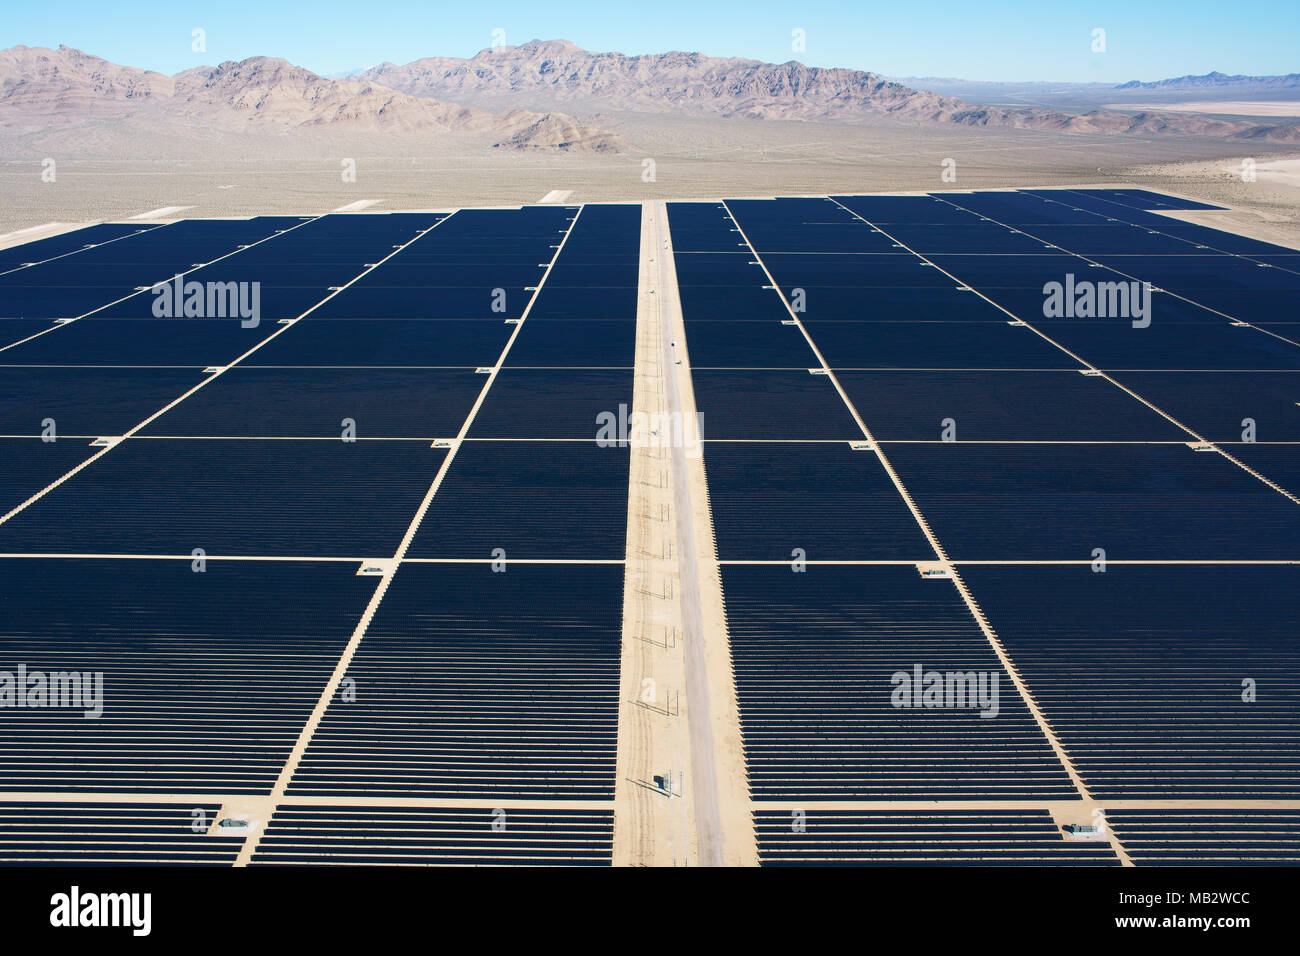 LUFTAUFNAHME. Großes Feld von Photovoltaik-Paneelen in der felsigen Mojave-Wüste. Stateline Solar Facility, Nipton, San Bernardino County, Kalifornien, USA. Stockfoto